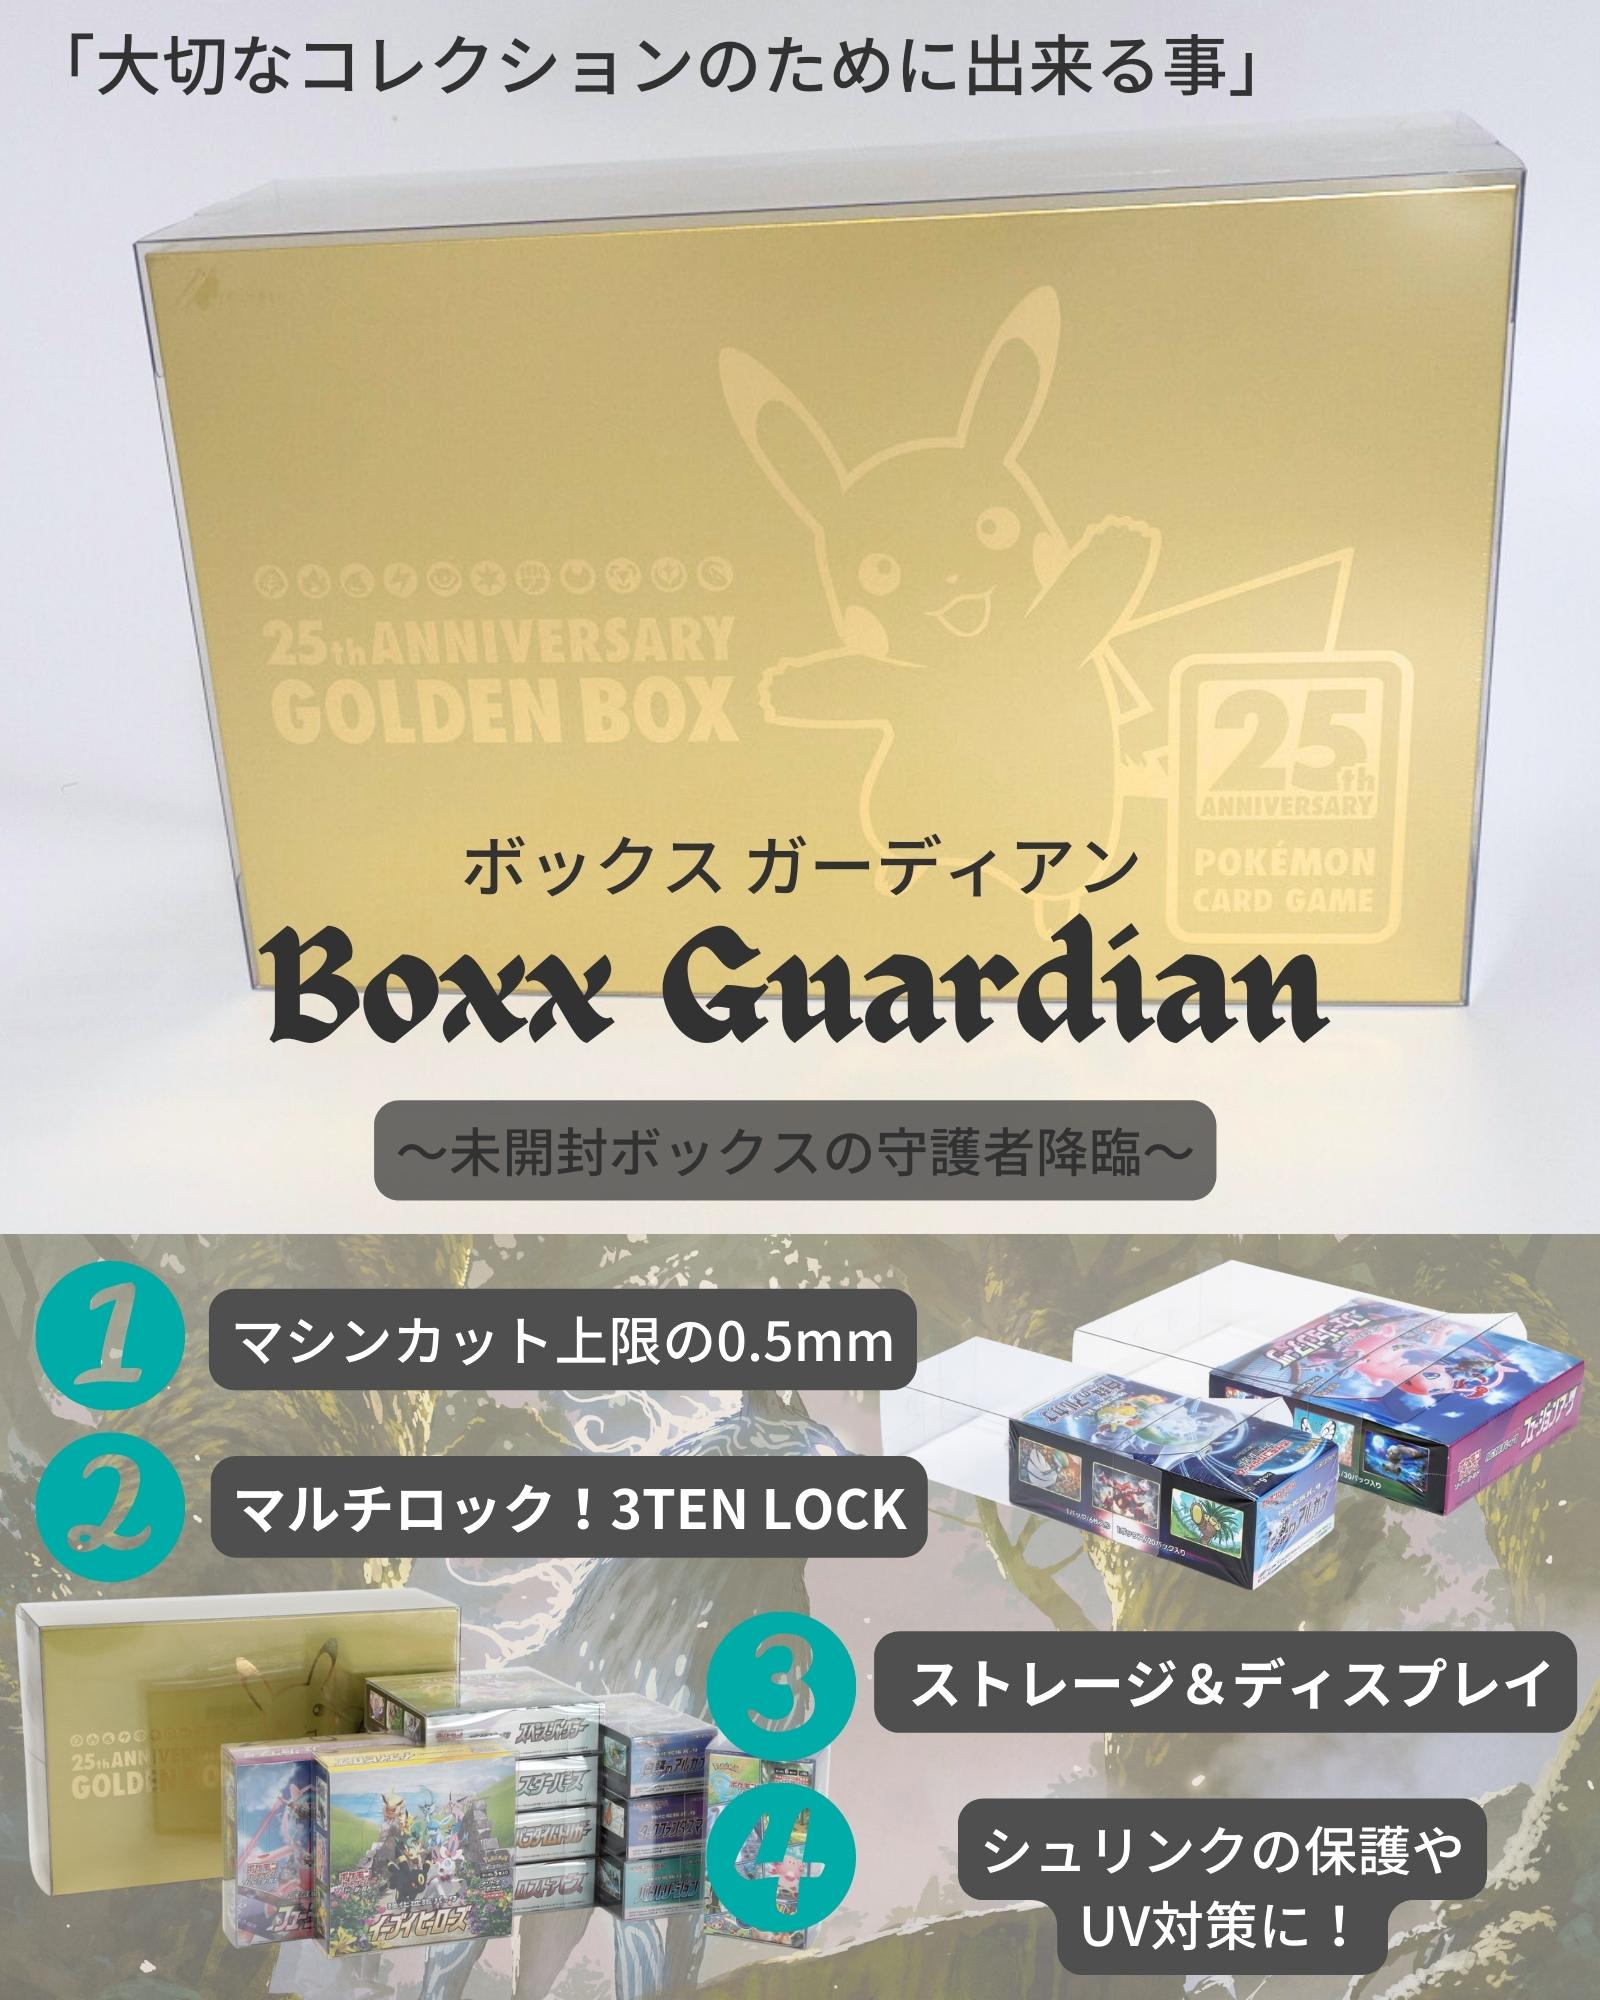 25th ANNIVERSARY GOLDEN BOX ３個セット